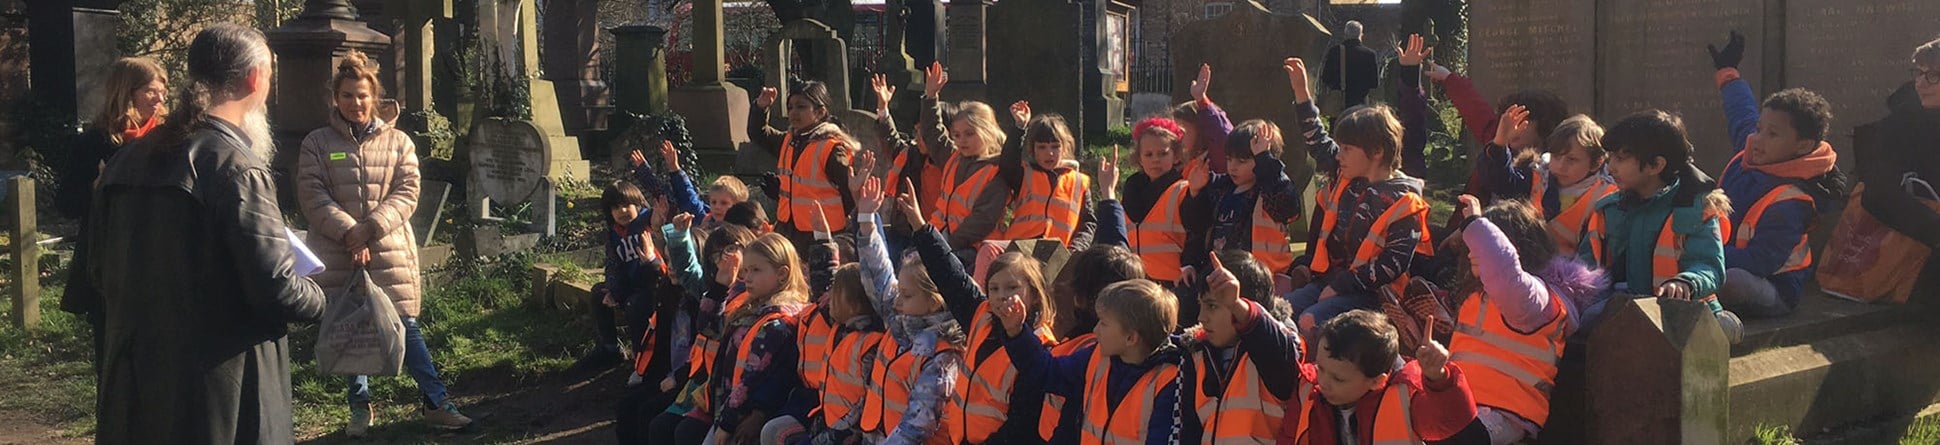 Children wearing high viz jackets gathered in Abney Park